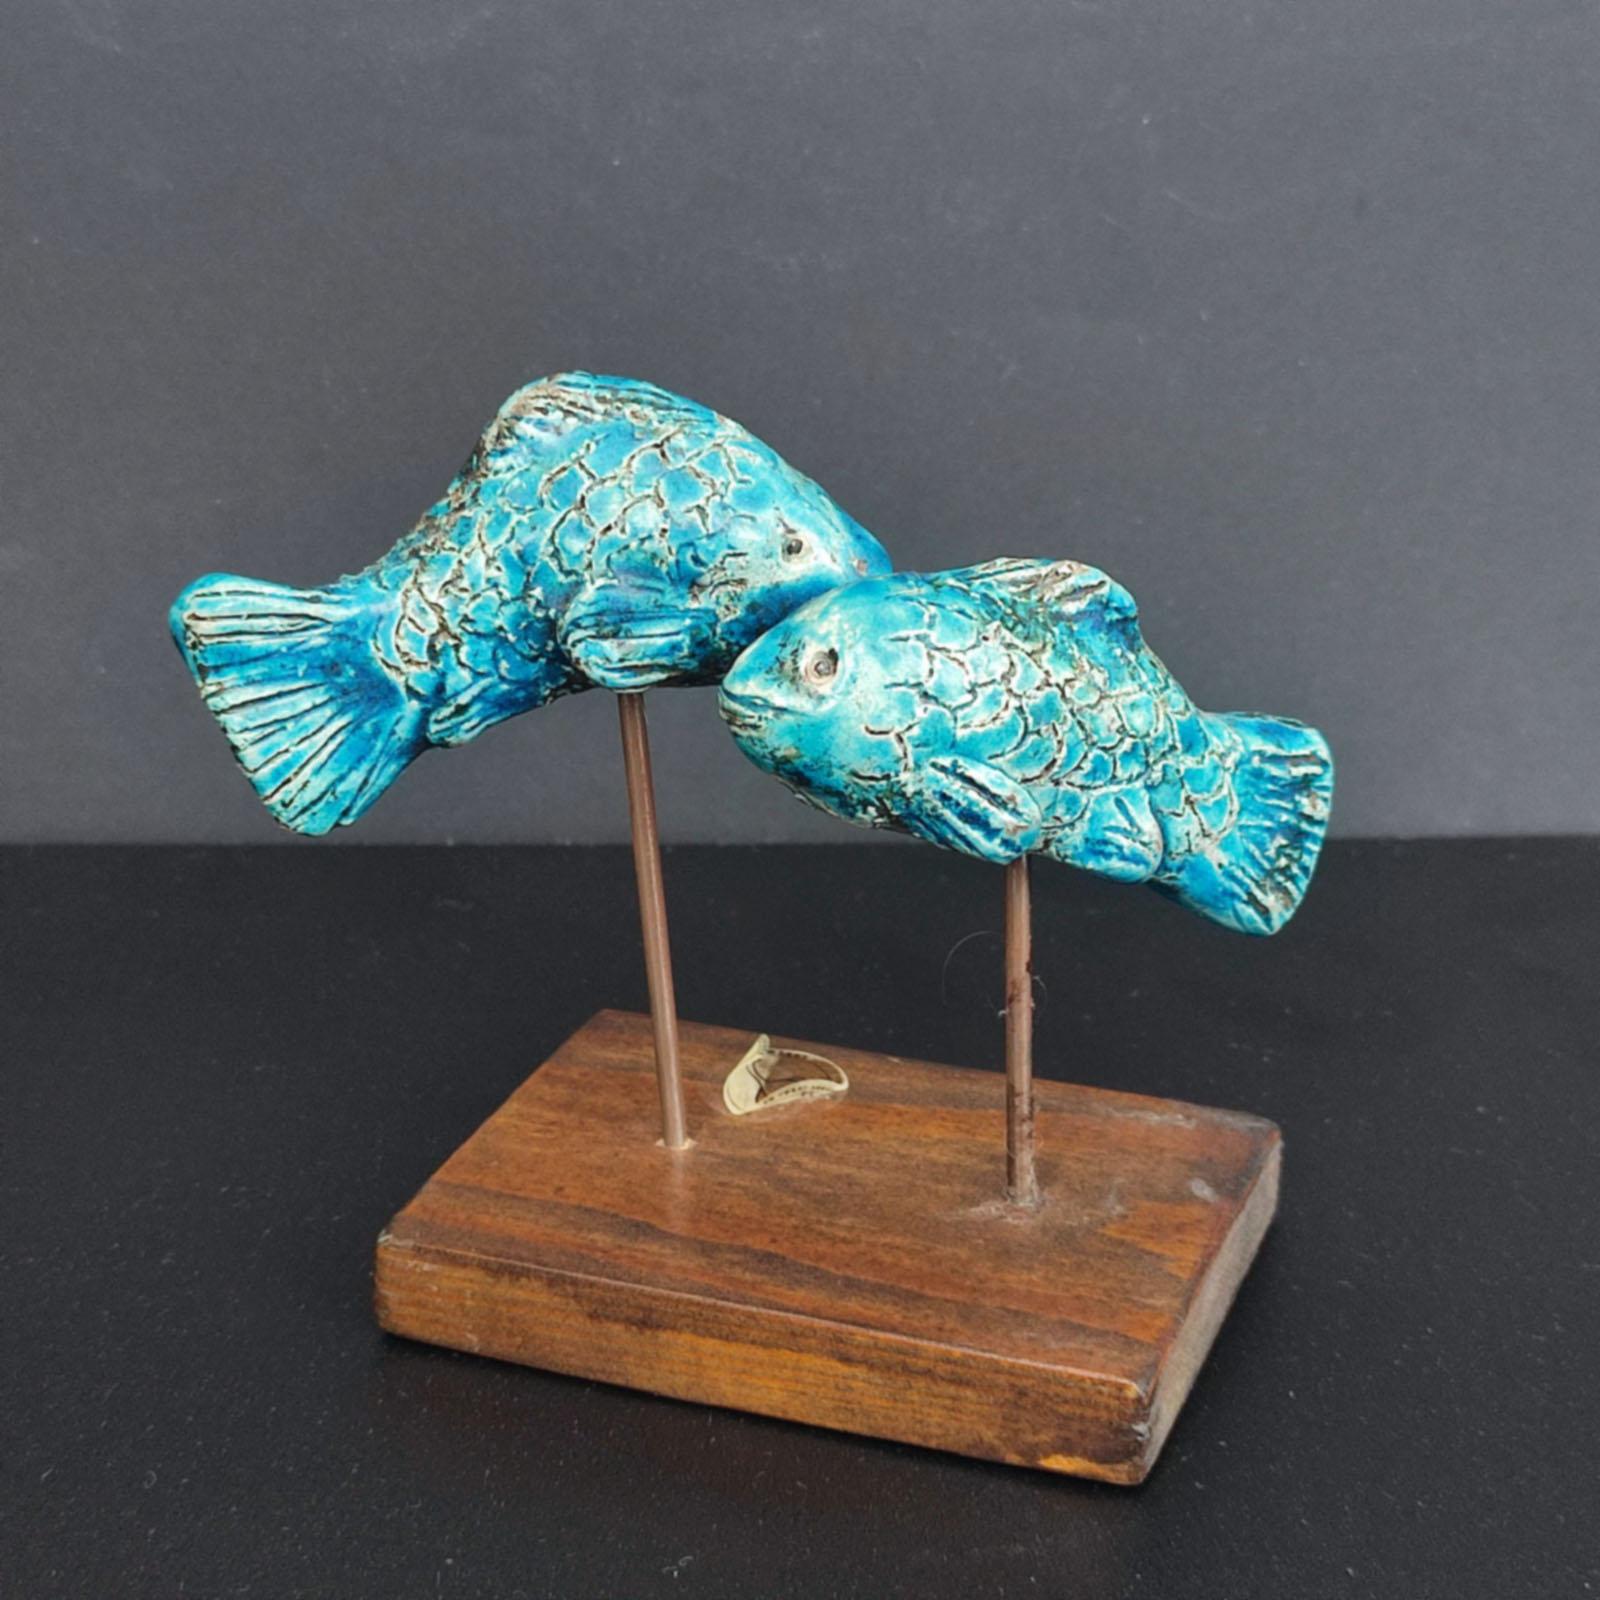 Danish Midcentury Scandinavian Ceramic Fish Sculpture Blue Glaze Free Shipping